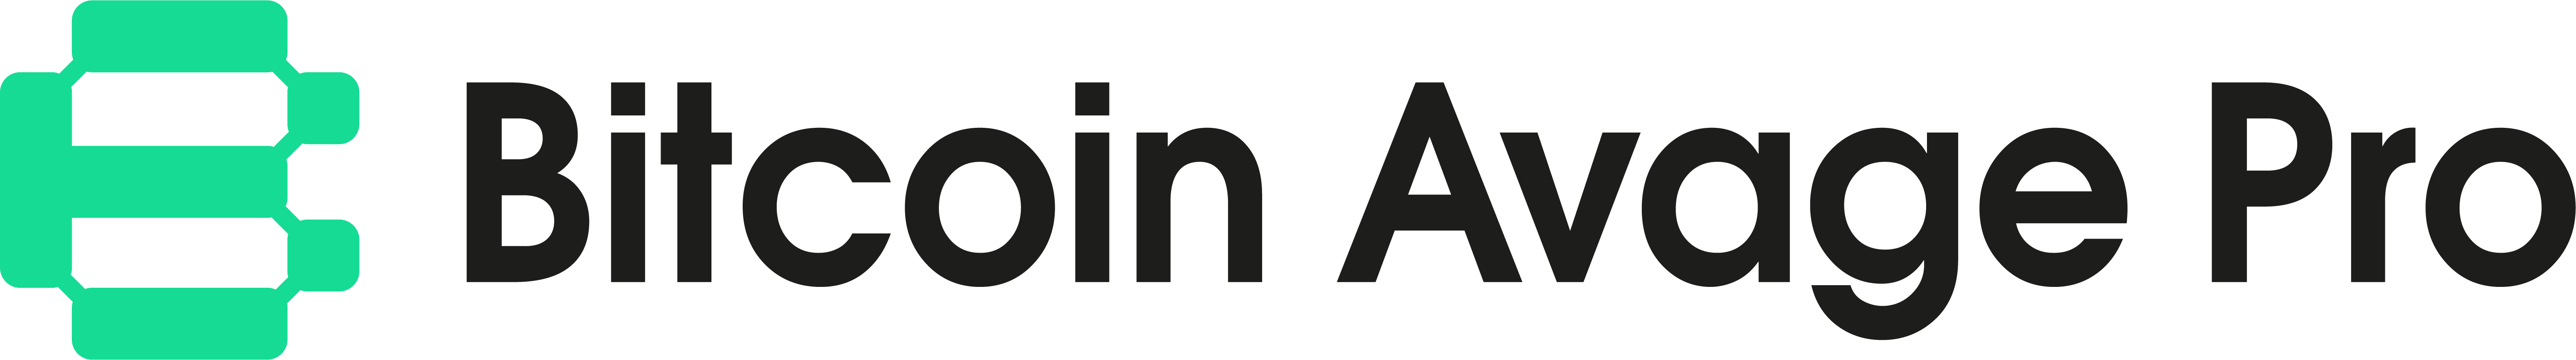 Bitcoin Avage Pro logotipas